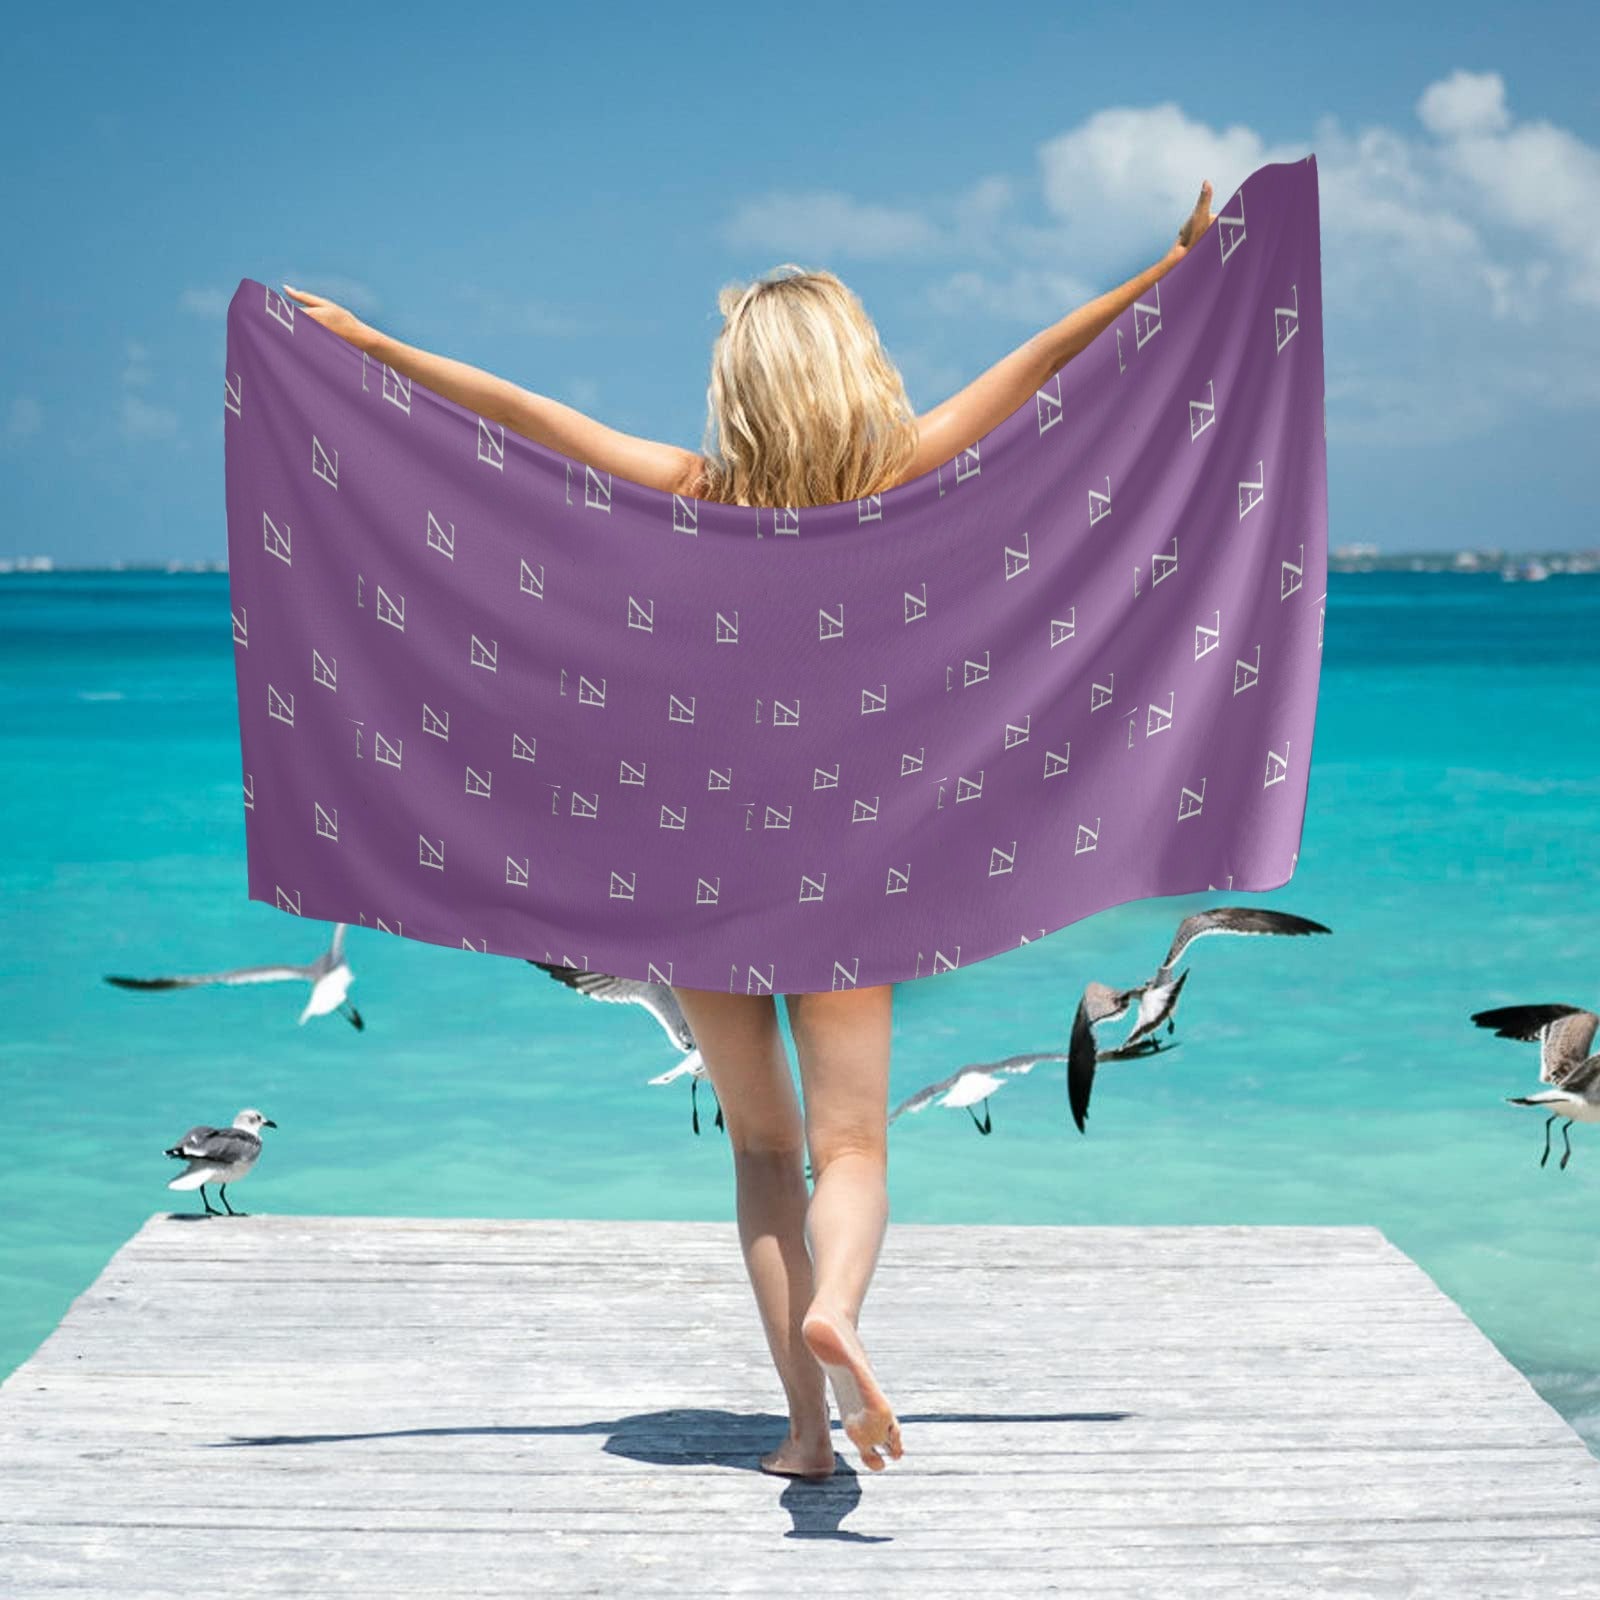 fz towel - purple beach towel 31"x71"(new)( made in queen)